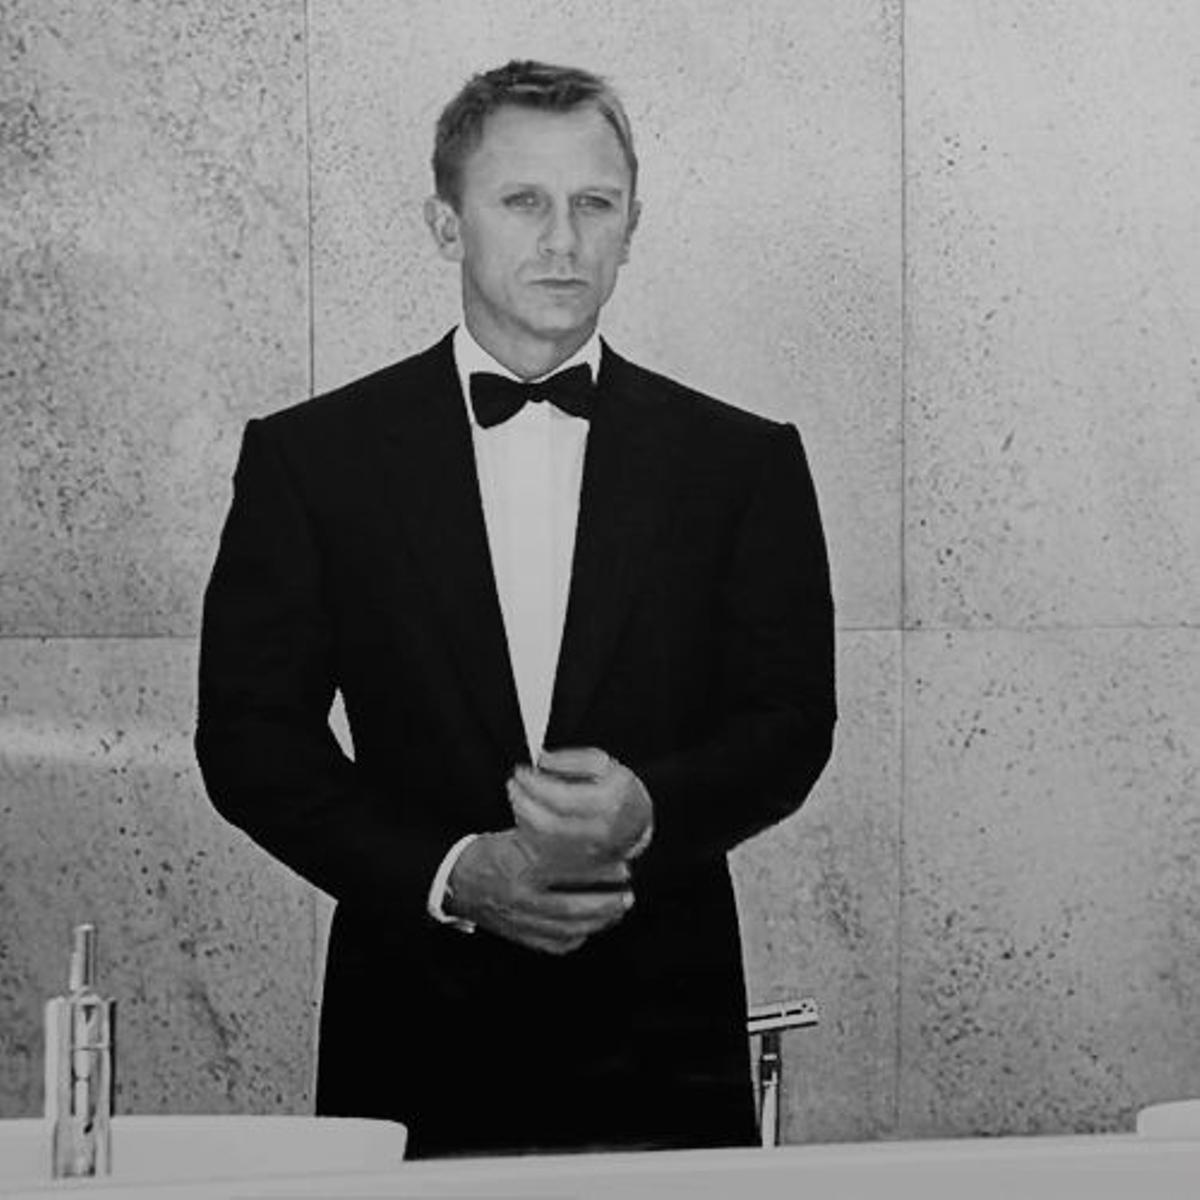 Regalos Navidad 2016: Spectre (James Bond)